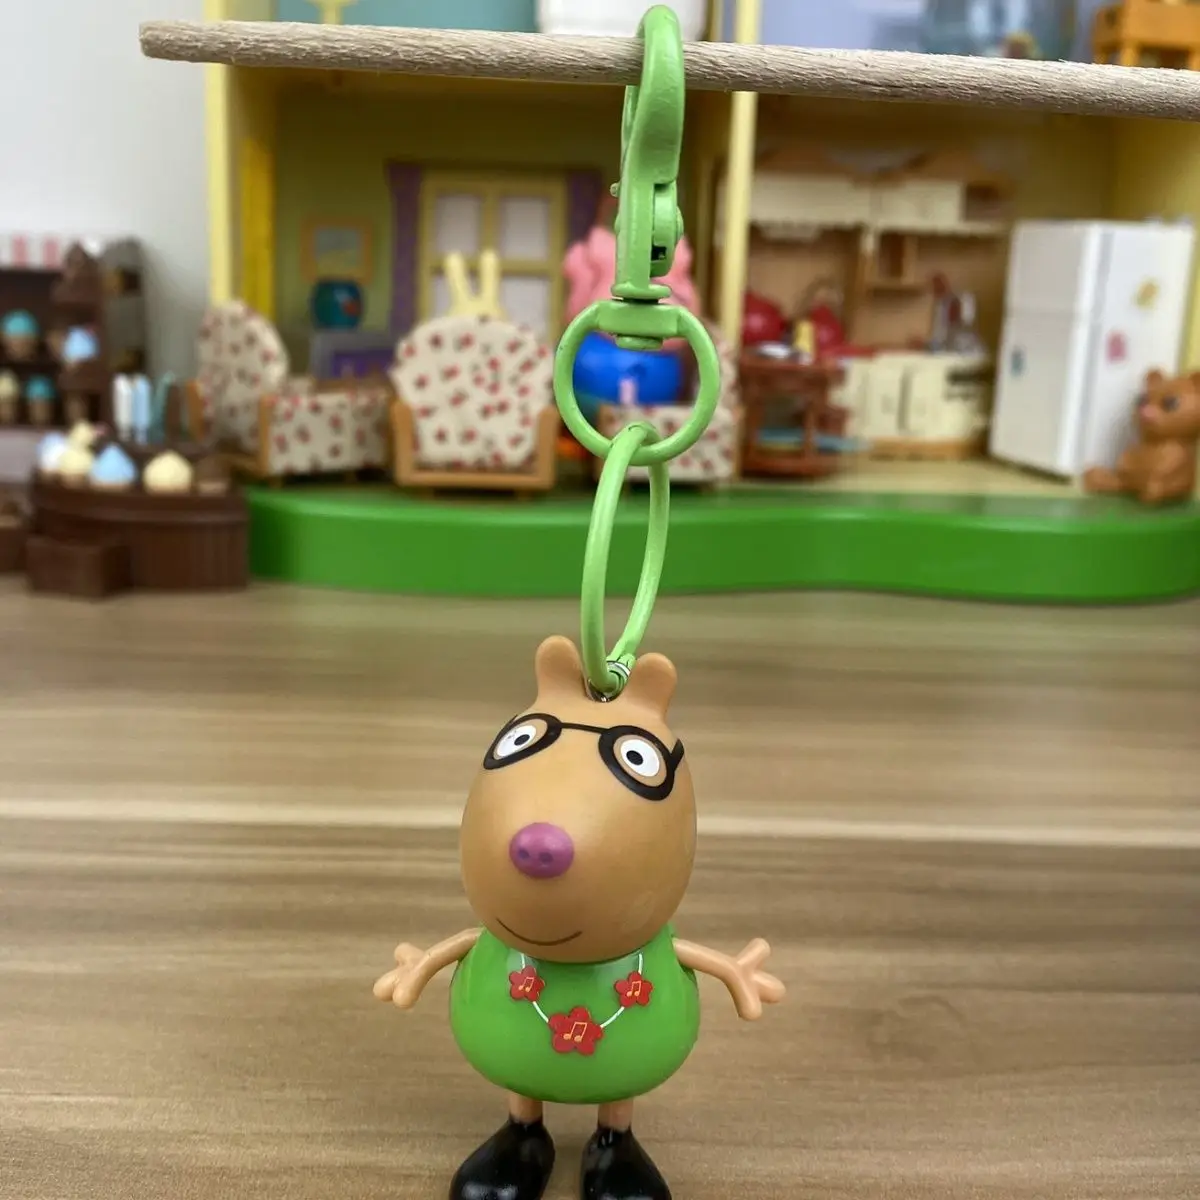 Peppa Pig New animation peripheral kawaii cartoon George Pig Suzy Sheep keychain pendant creative pendant holiday gift wholesale images - 6